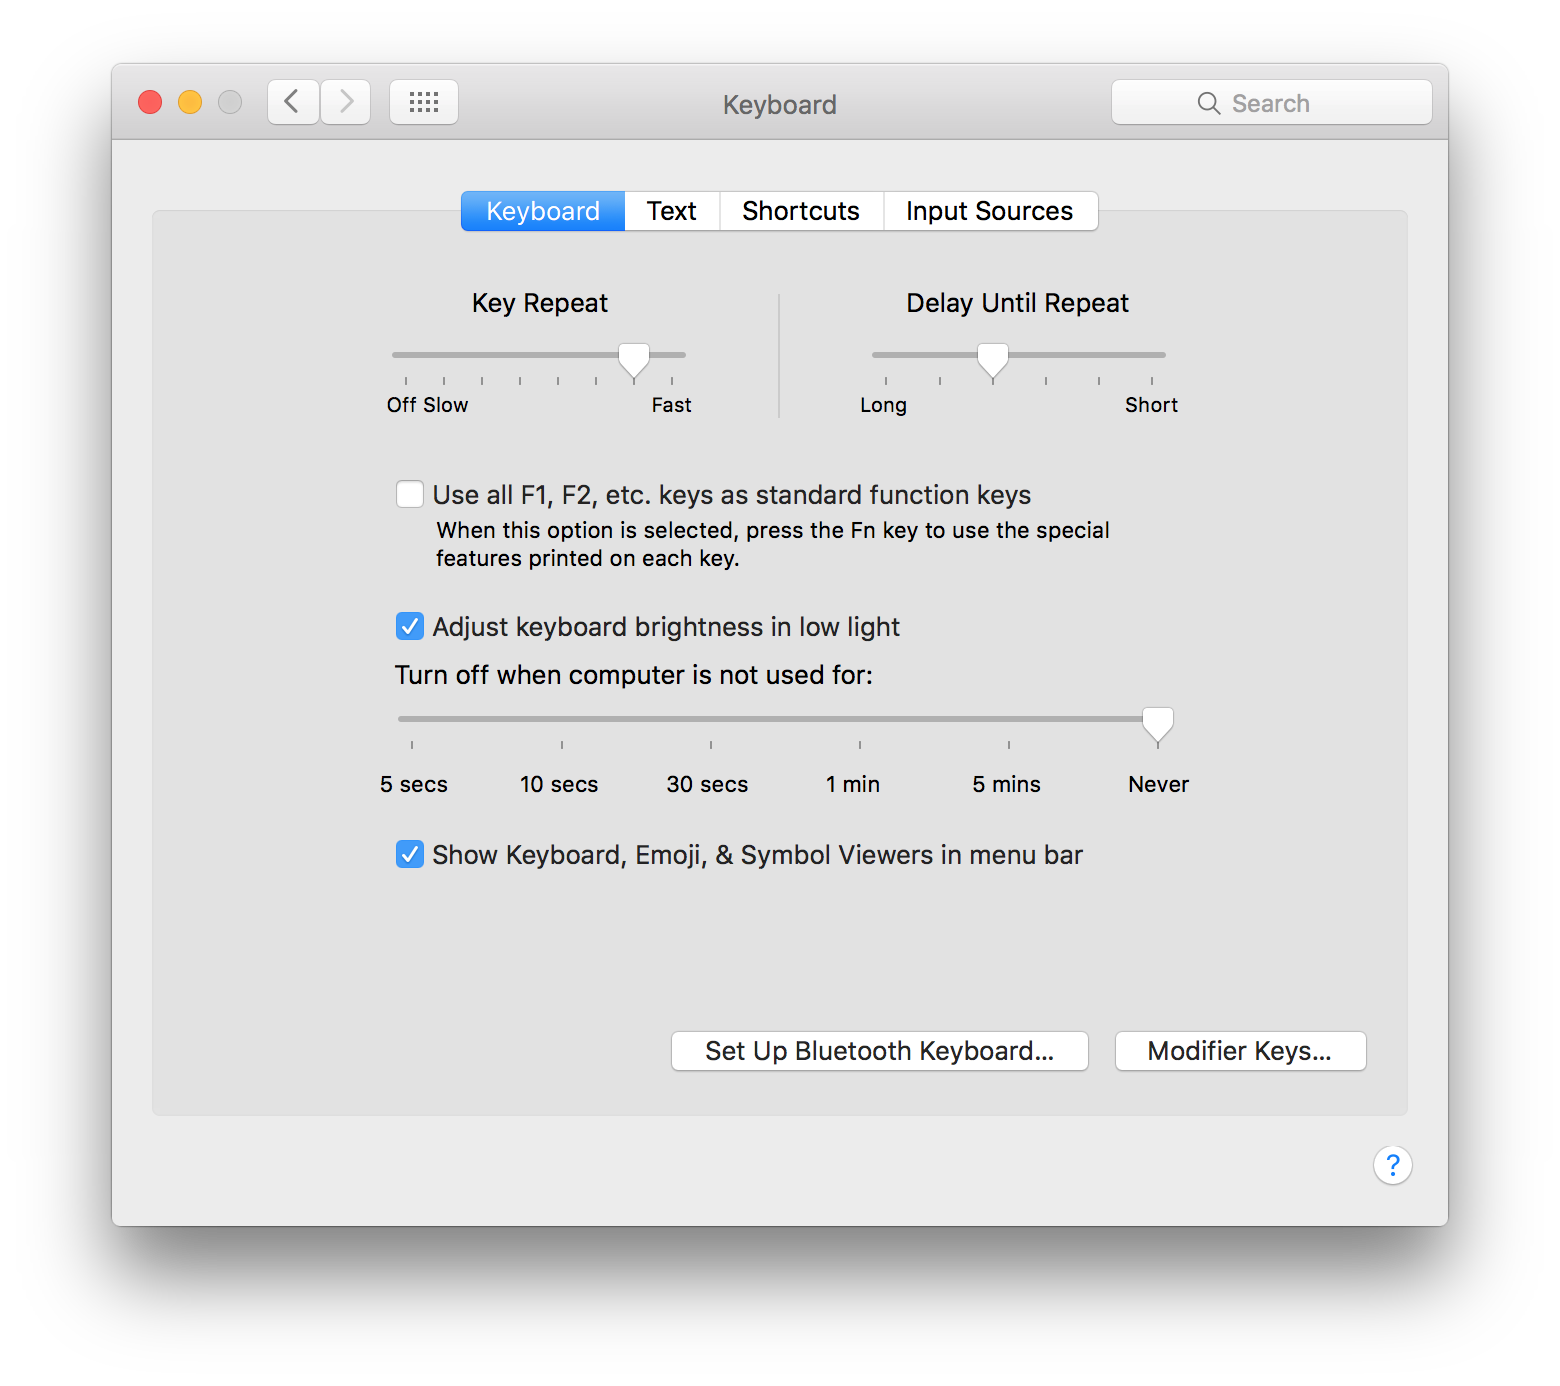 microsoft word will not open on mac